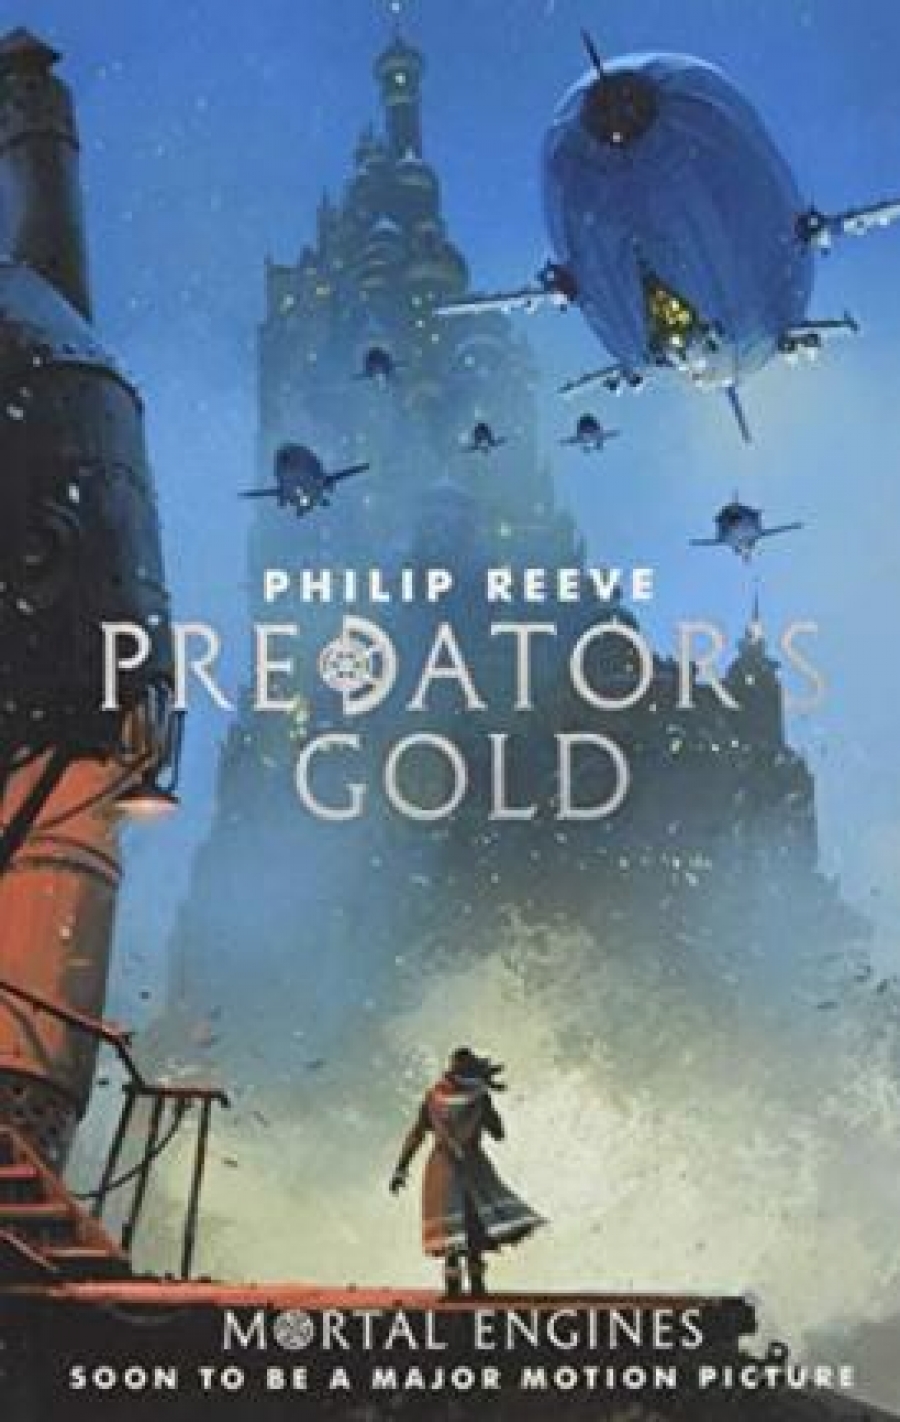 Reeve, Philip Mortal Engines 2: Predator's Gold 